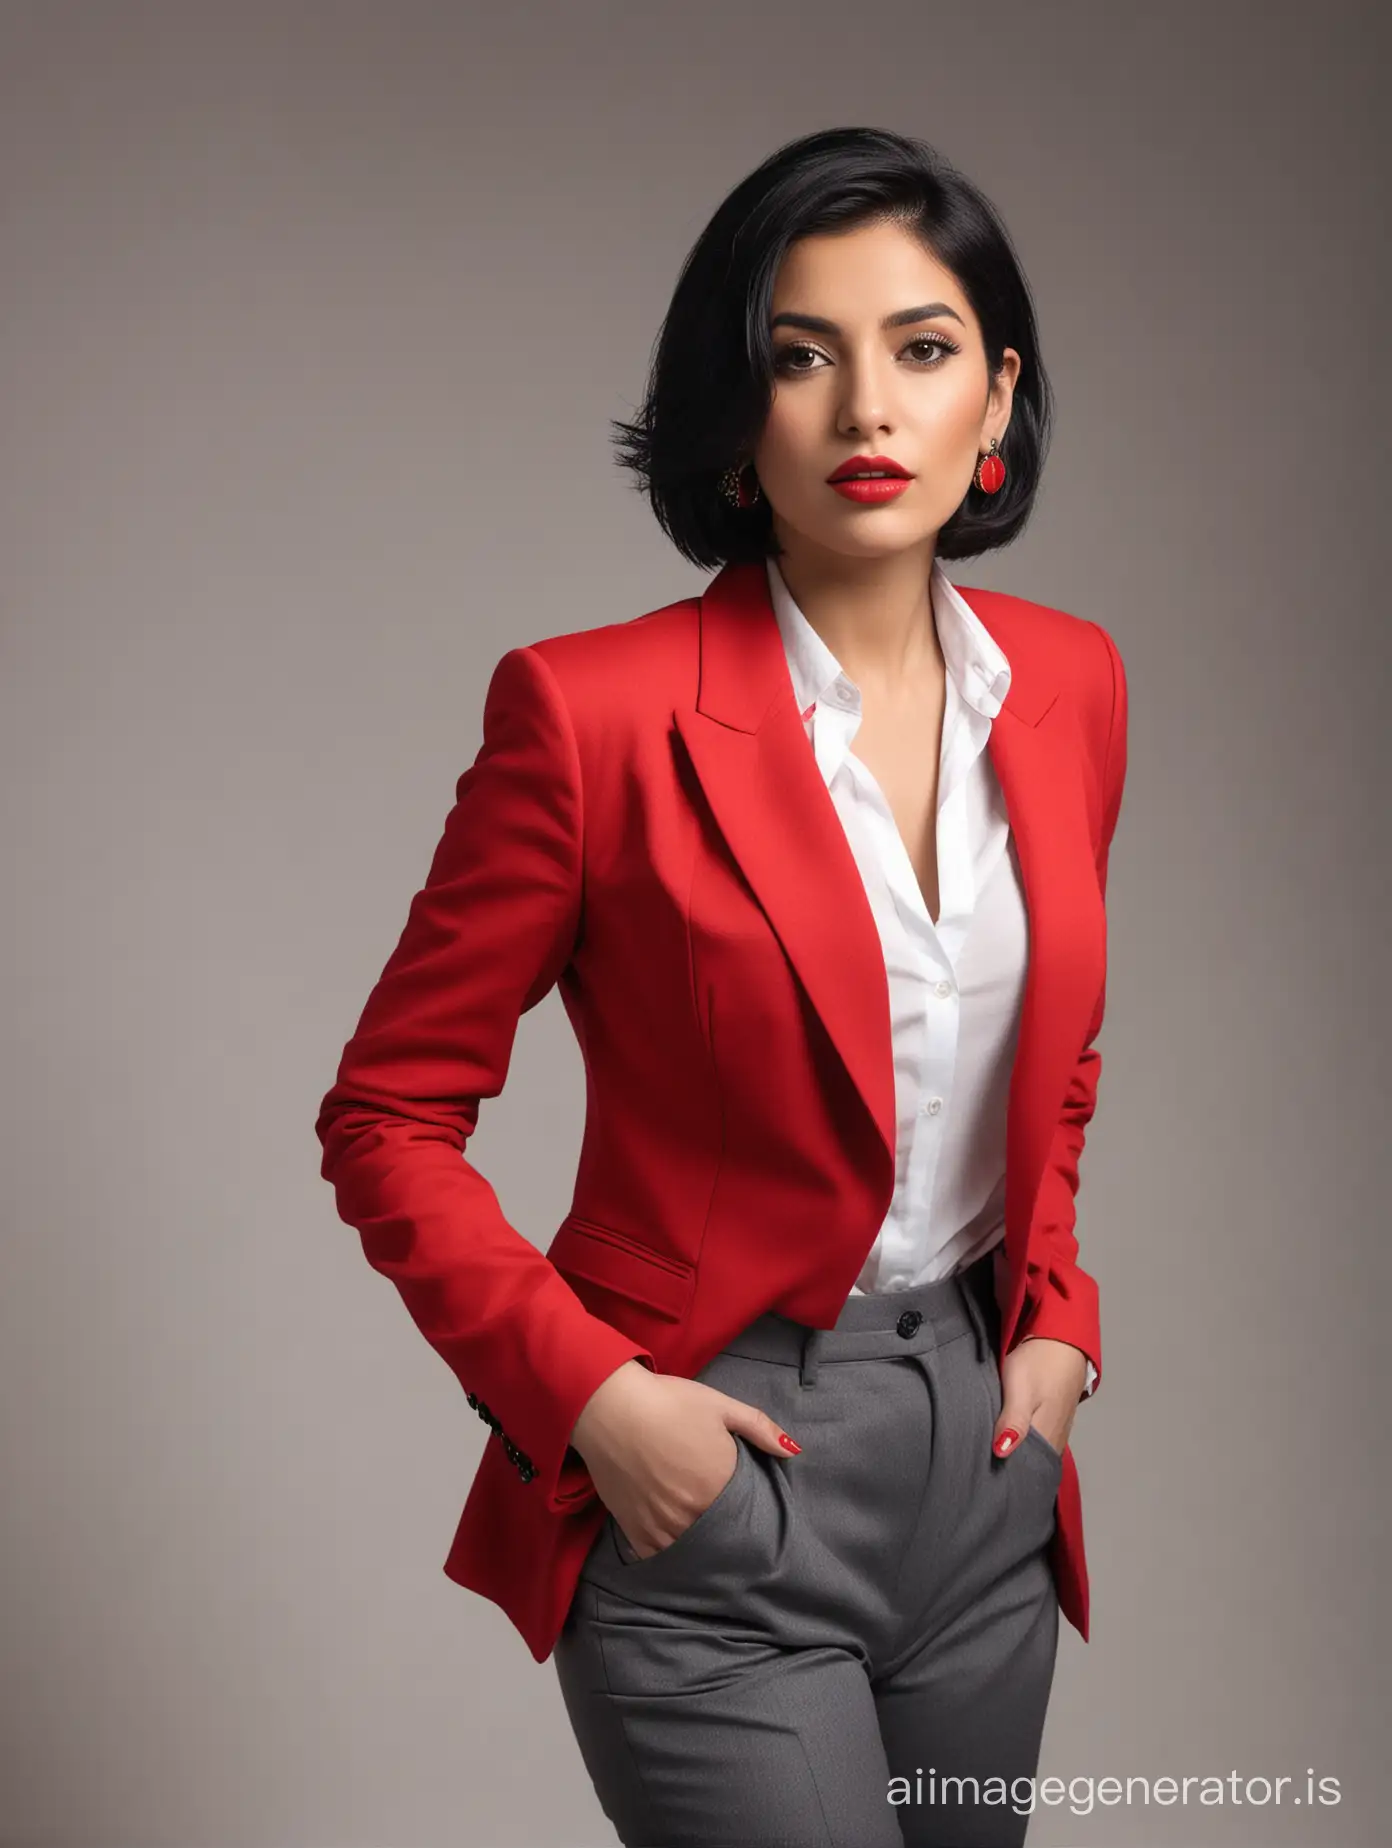 iranian woman 30 years old, red blazer, white shirt, red earrings, red lipsticks, black bob hair, full body, blank shite background, dramatic lighting